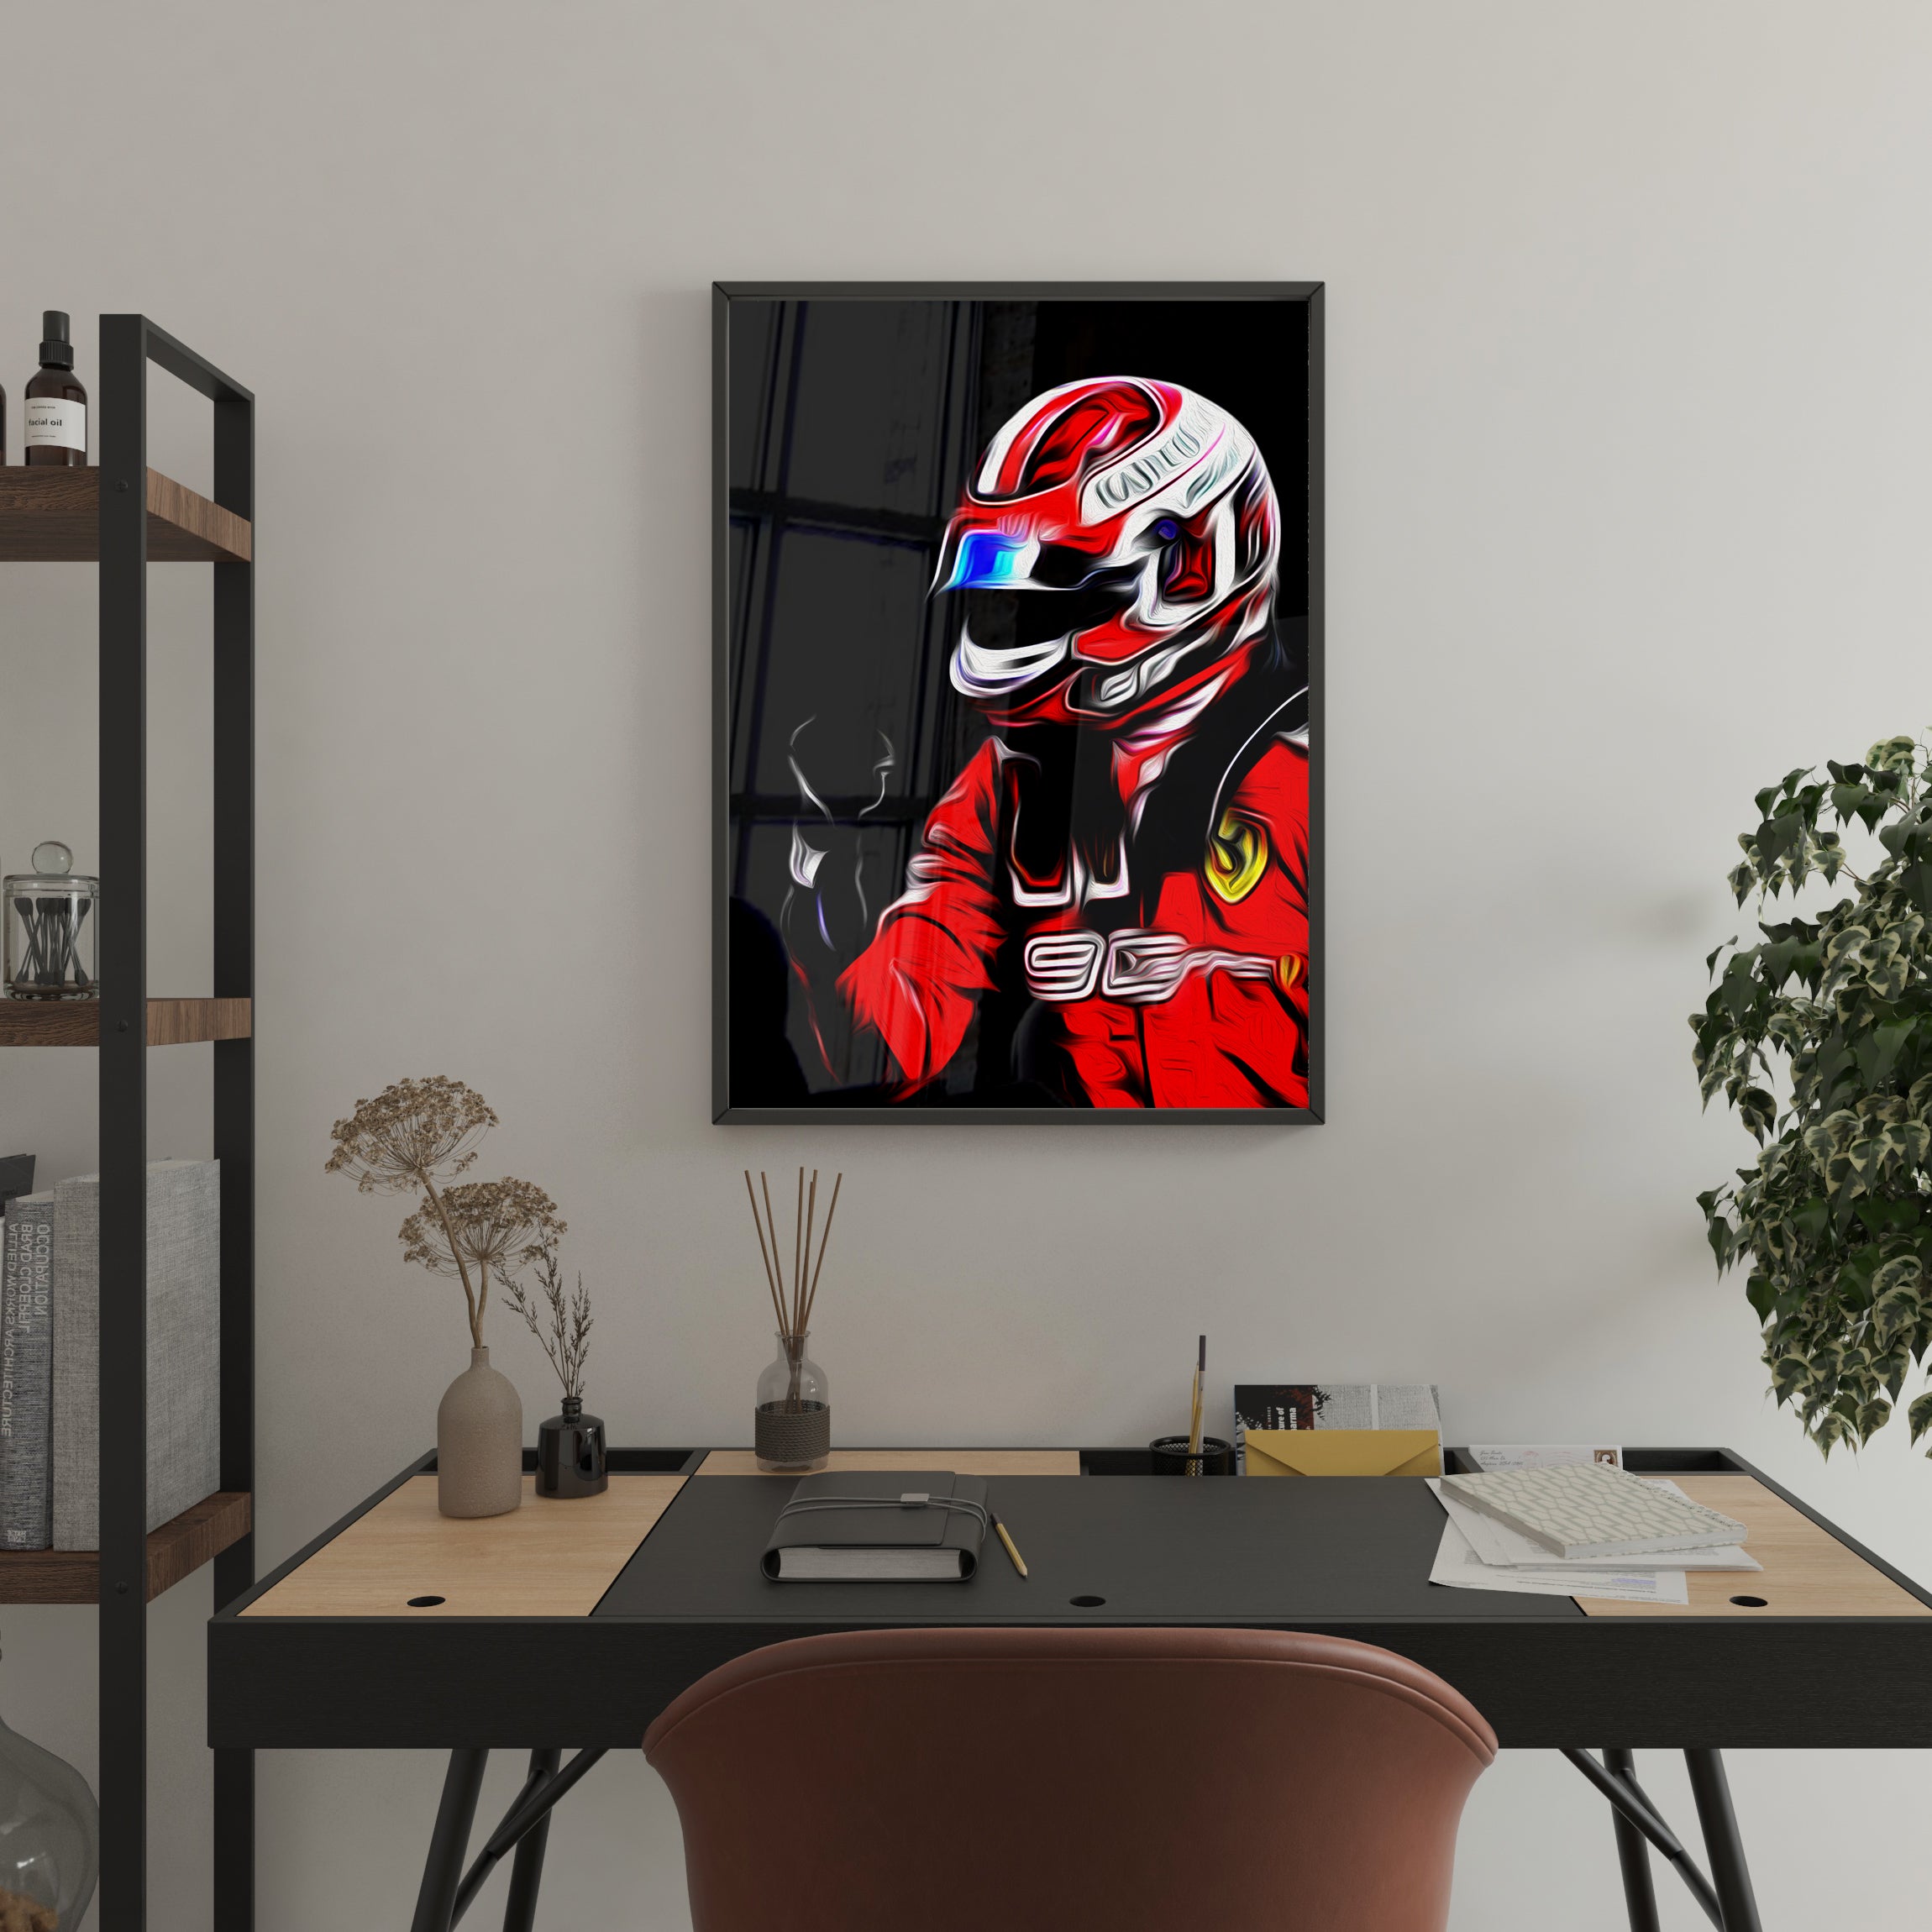 Charles Leclerc, Ferrari 2019 - Formula 1 Print